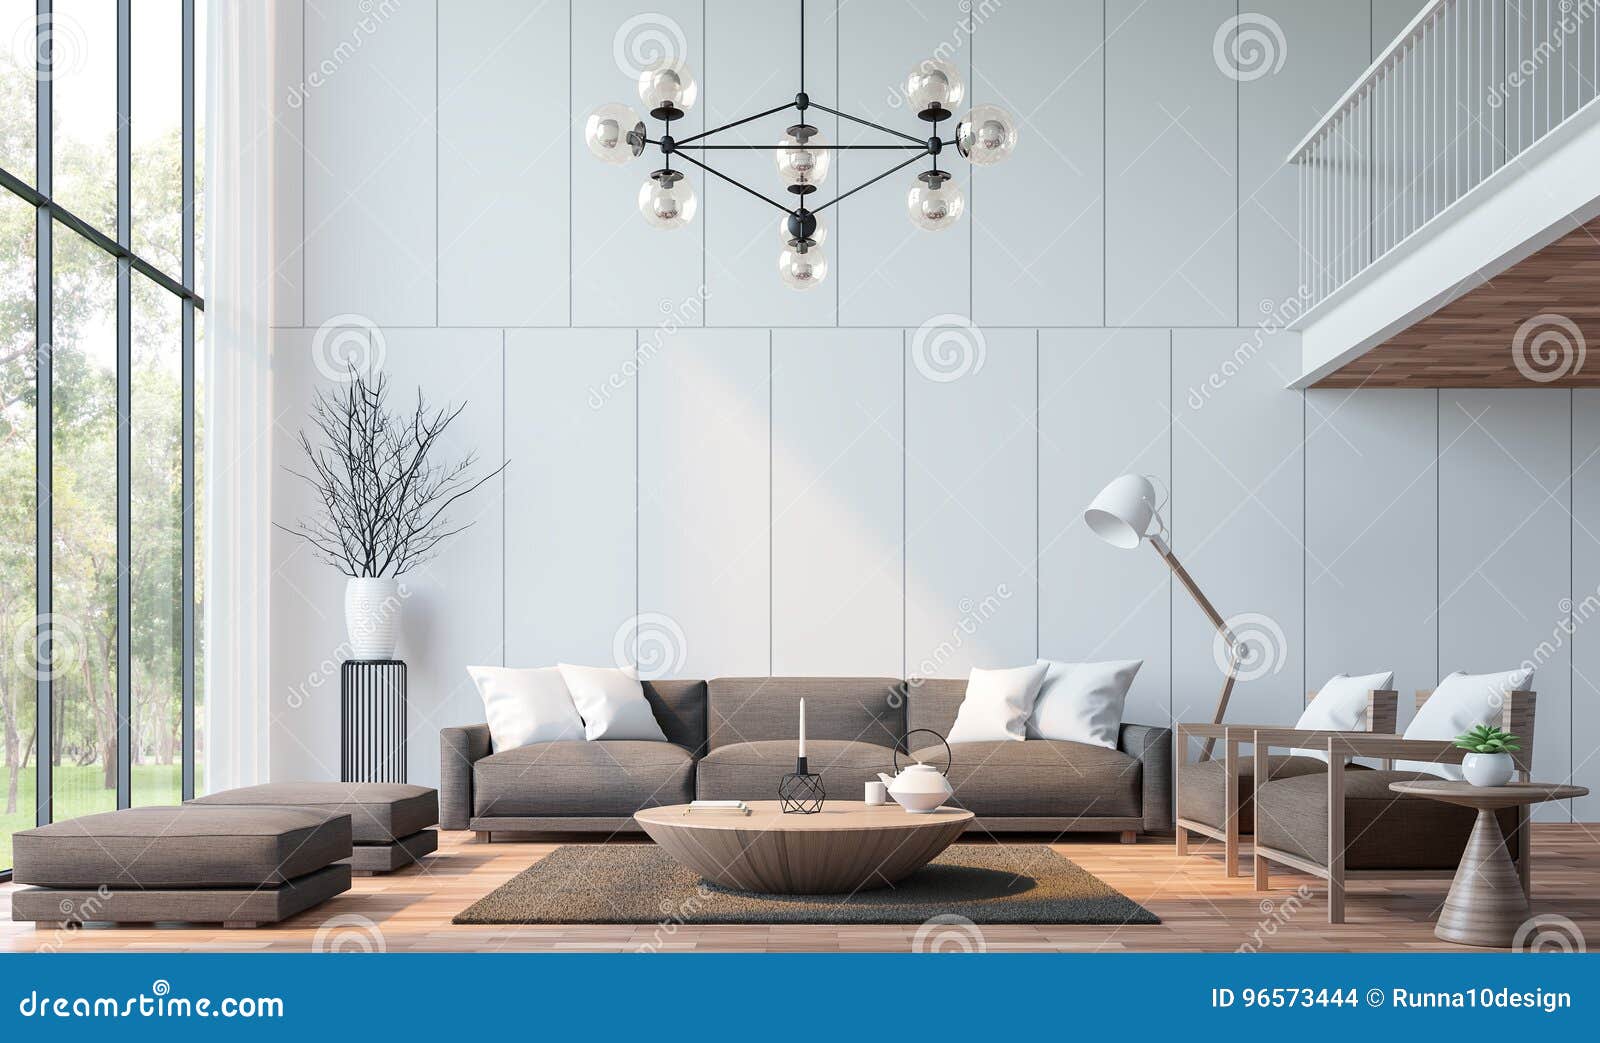 modern living room with mezzanine 3d rendering image